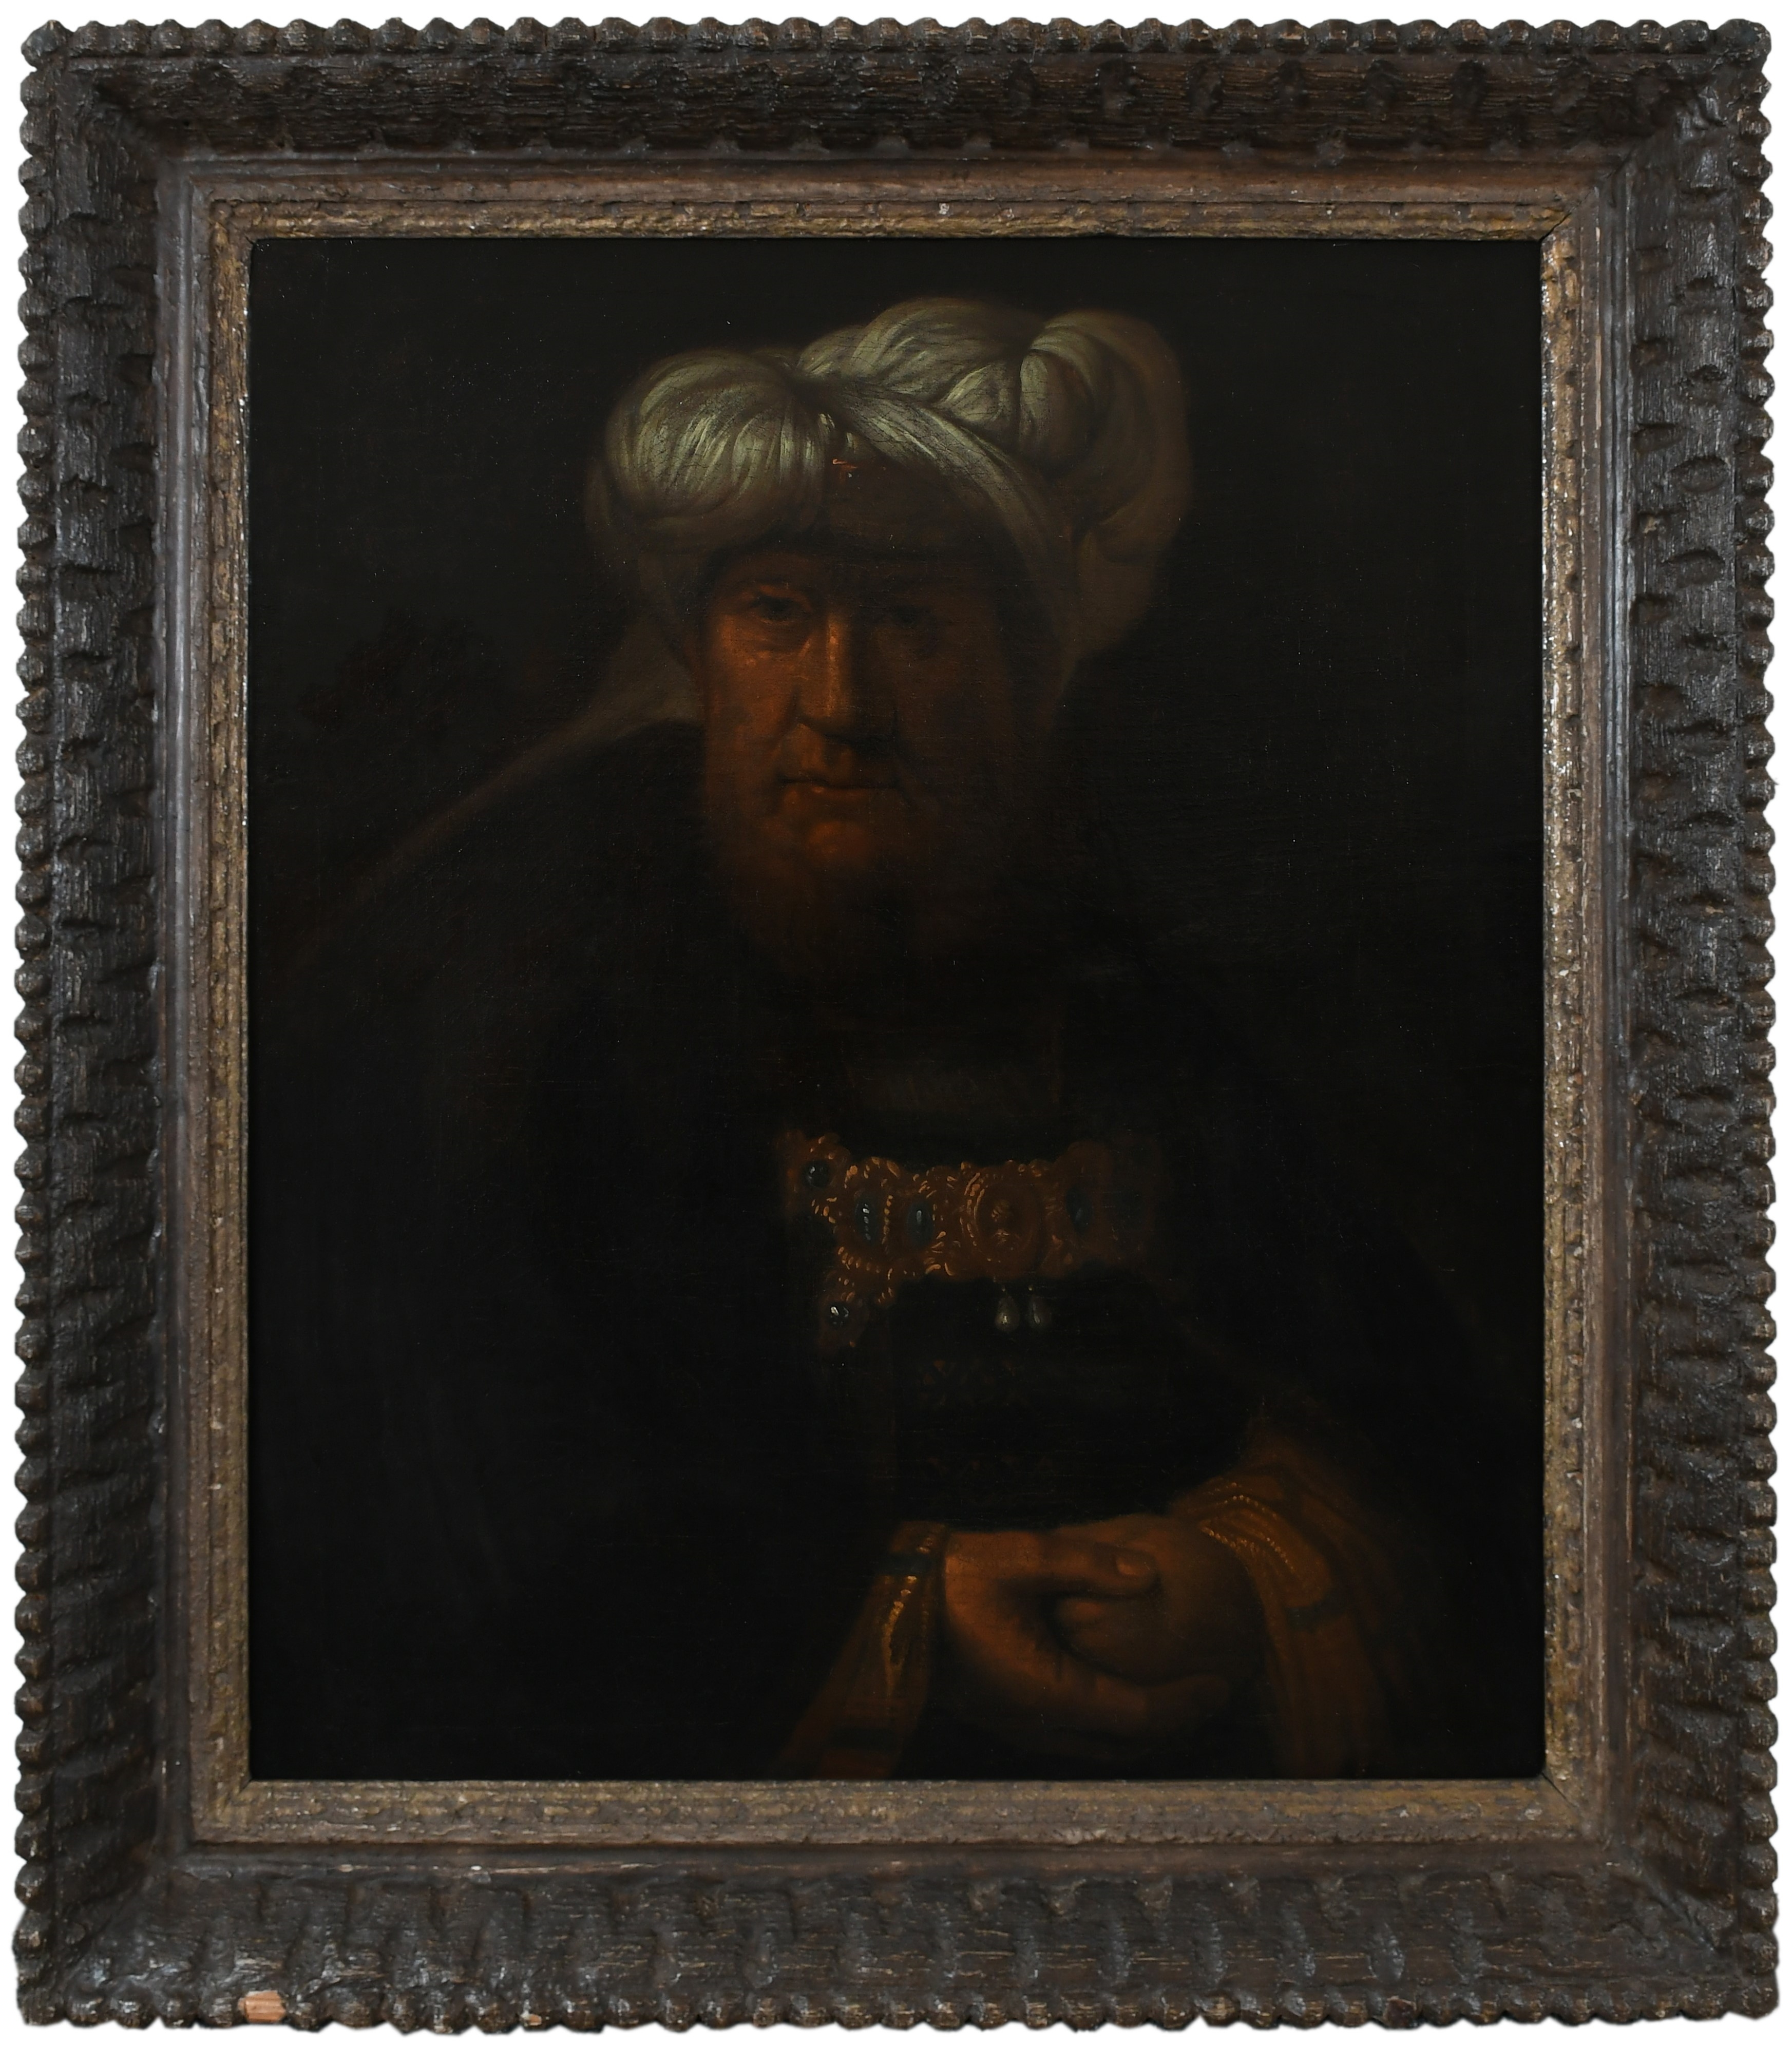 Artwork by Rembrandt van Rijn, After Rembrandt Harmensz. van Rijn, Made of Oil on canvas